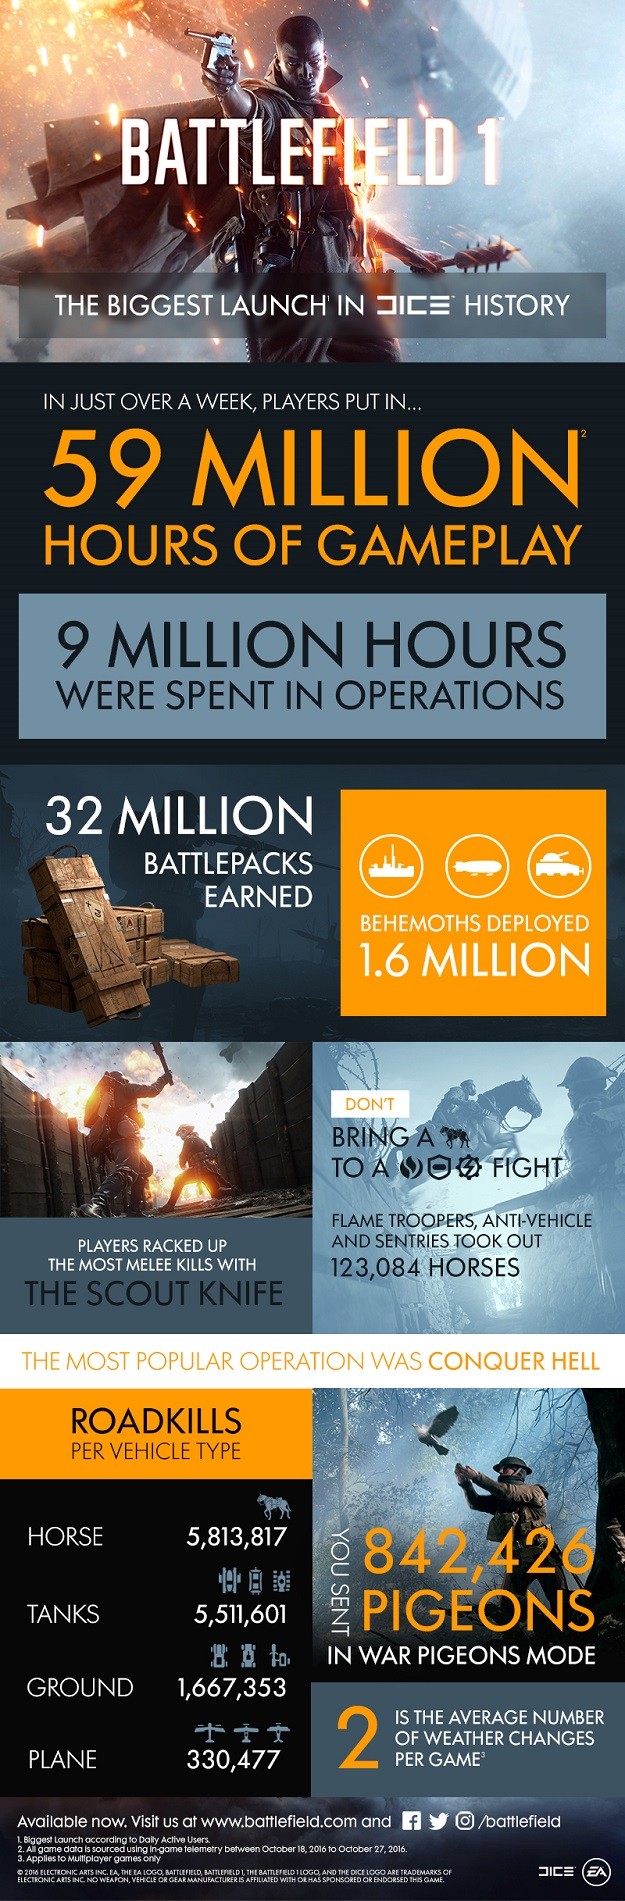 Battlefield 1 infographic (2)